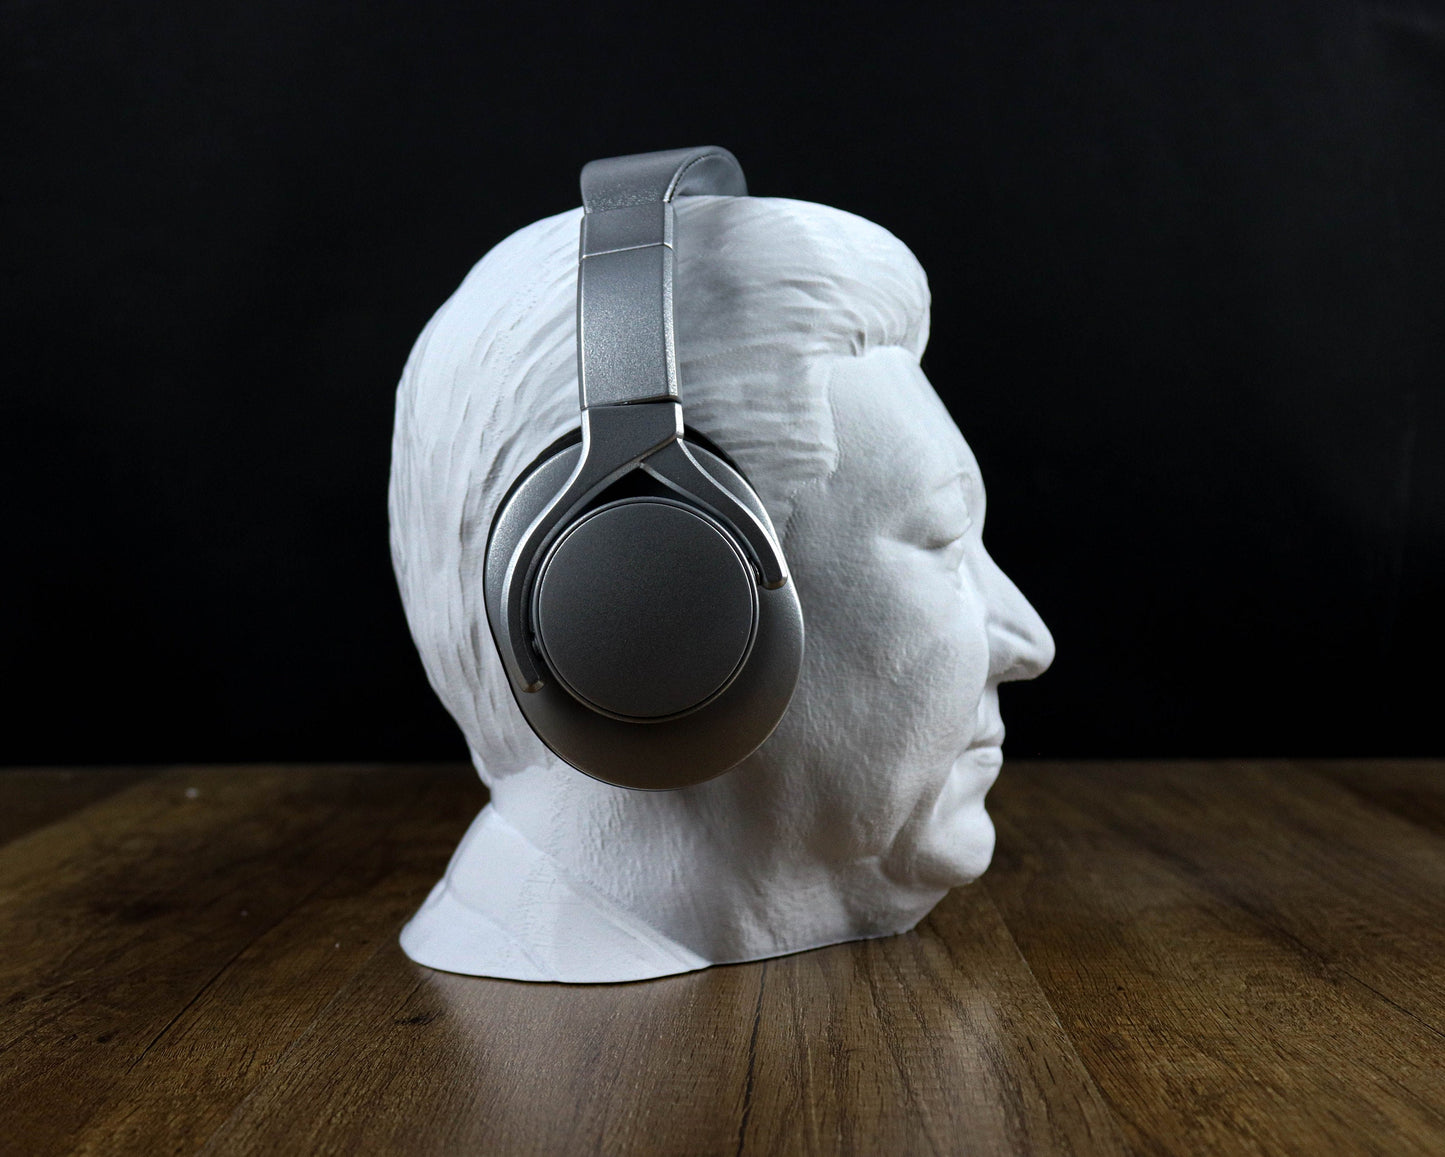 Xi Jinping Bust, China's President Sculpture, Headphone Desktop Decoration